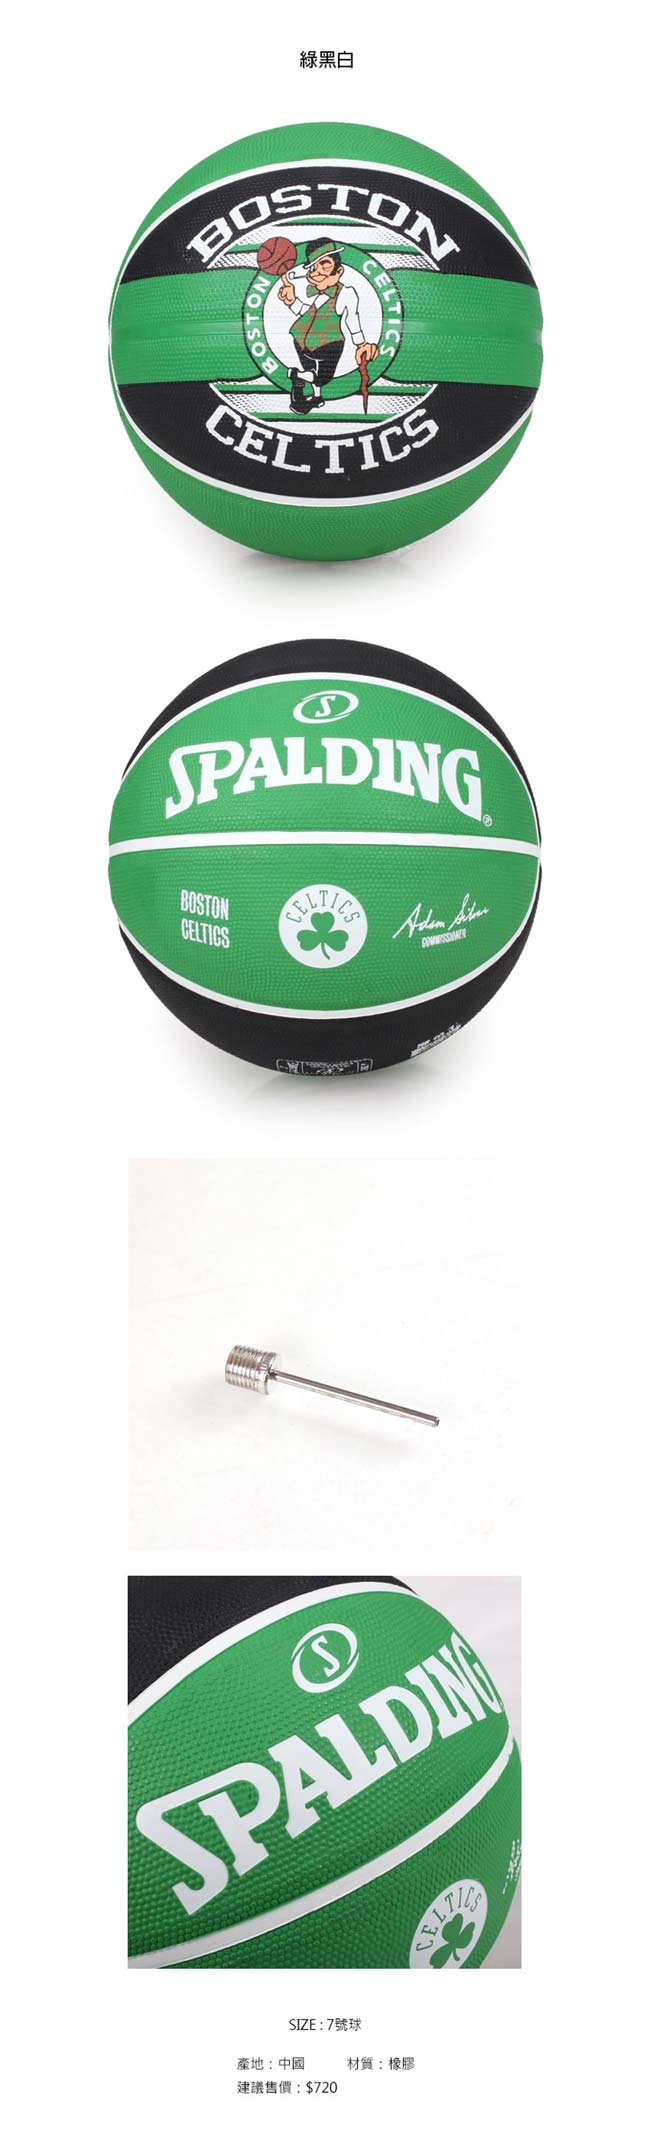 SPALDING 賽爾提克 Celtics 籃球 綠黑白